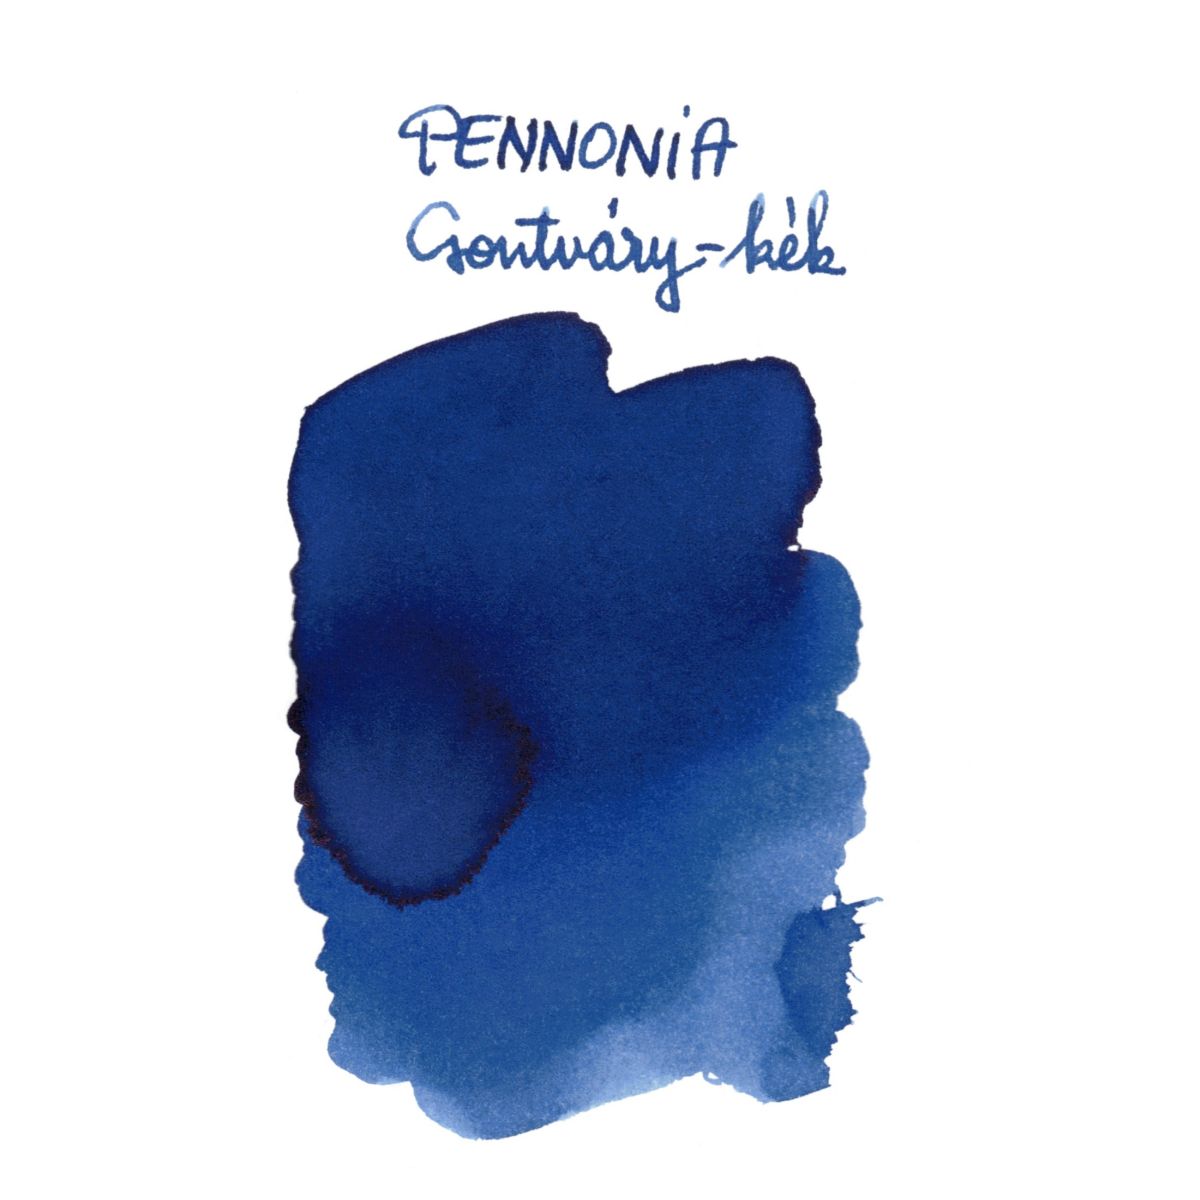 Pennonia Csontvary-kek